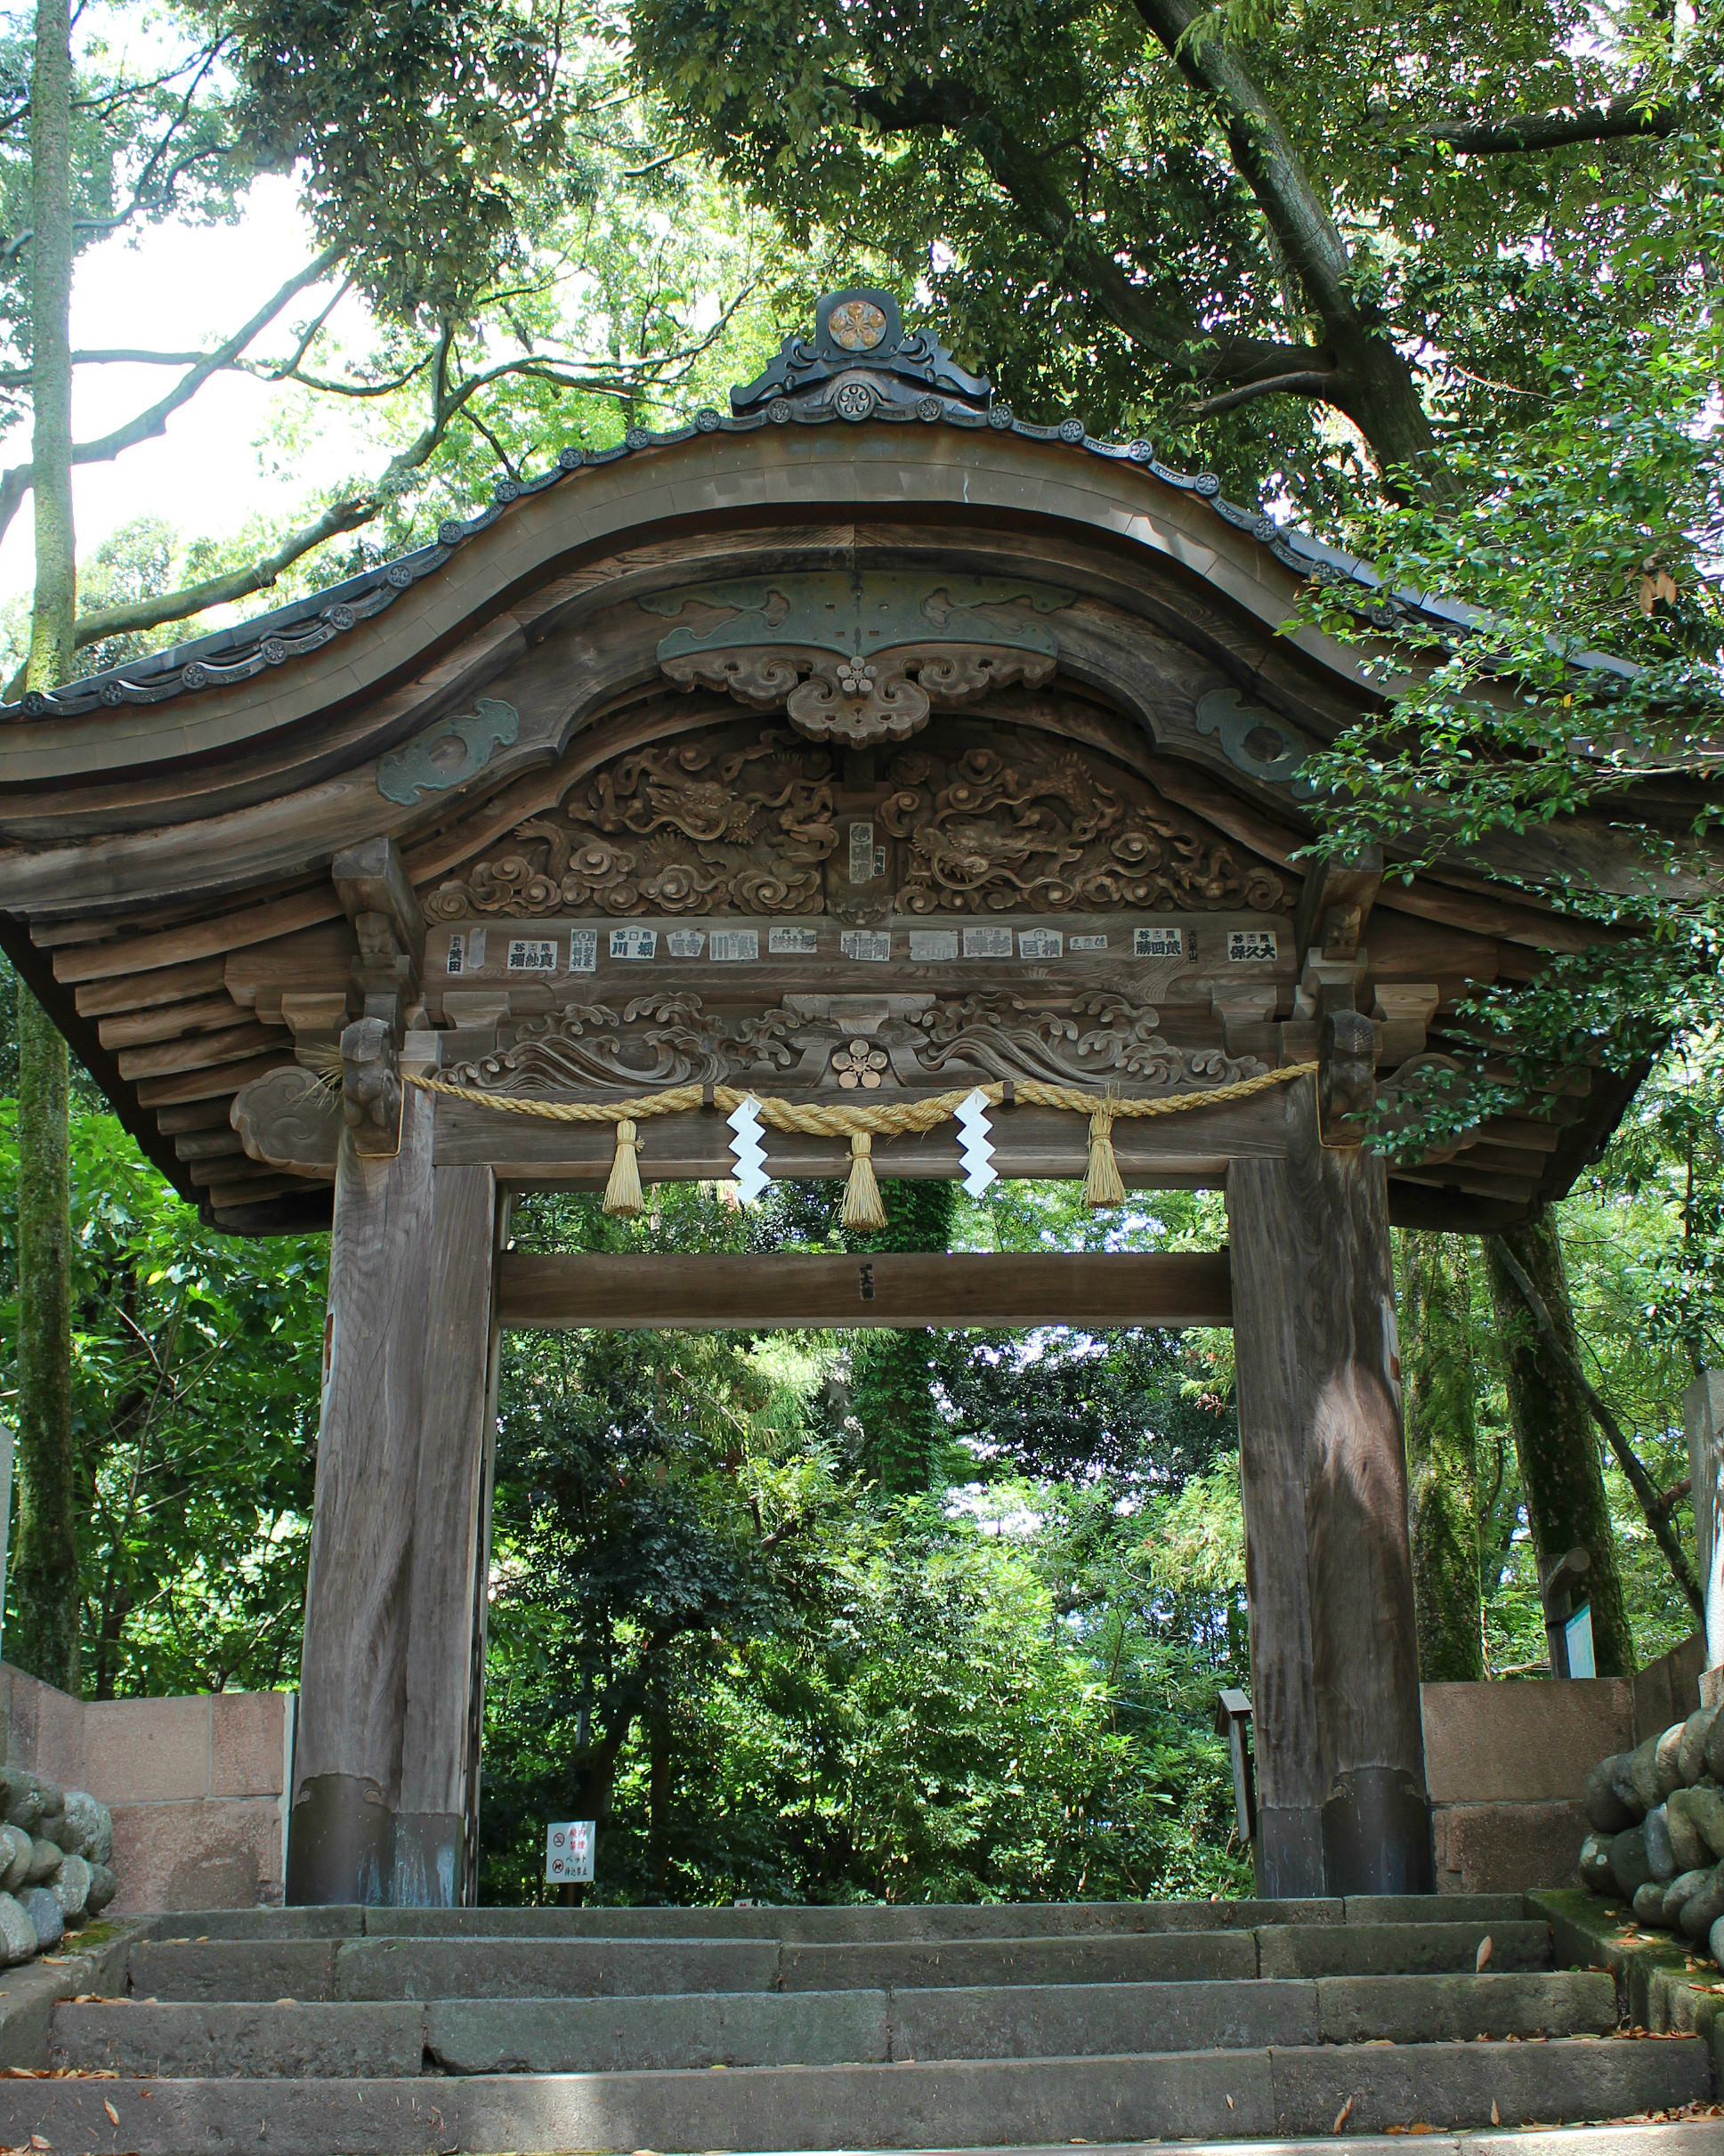 The ornate gabled gate of Oyama Shrine in Kanazawa, Japan